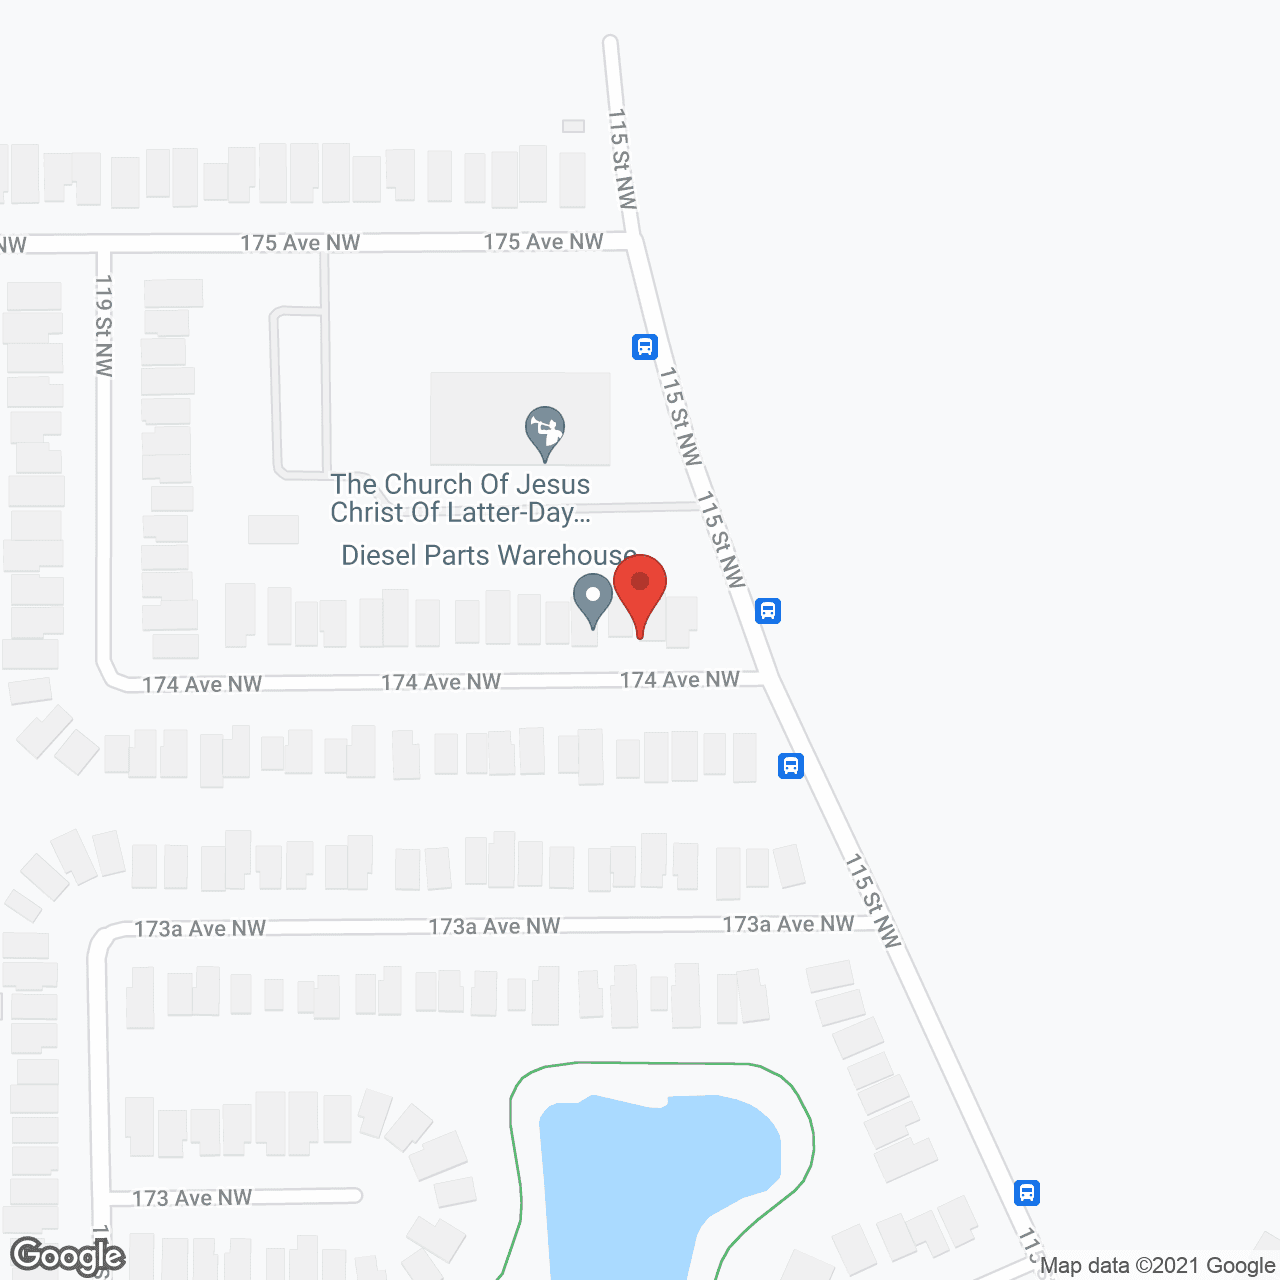 Newcastle HomeCare in google map